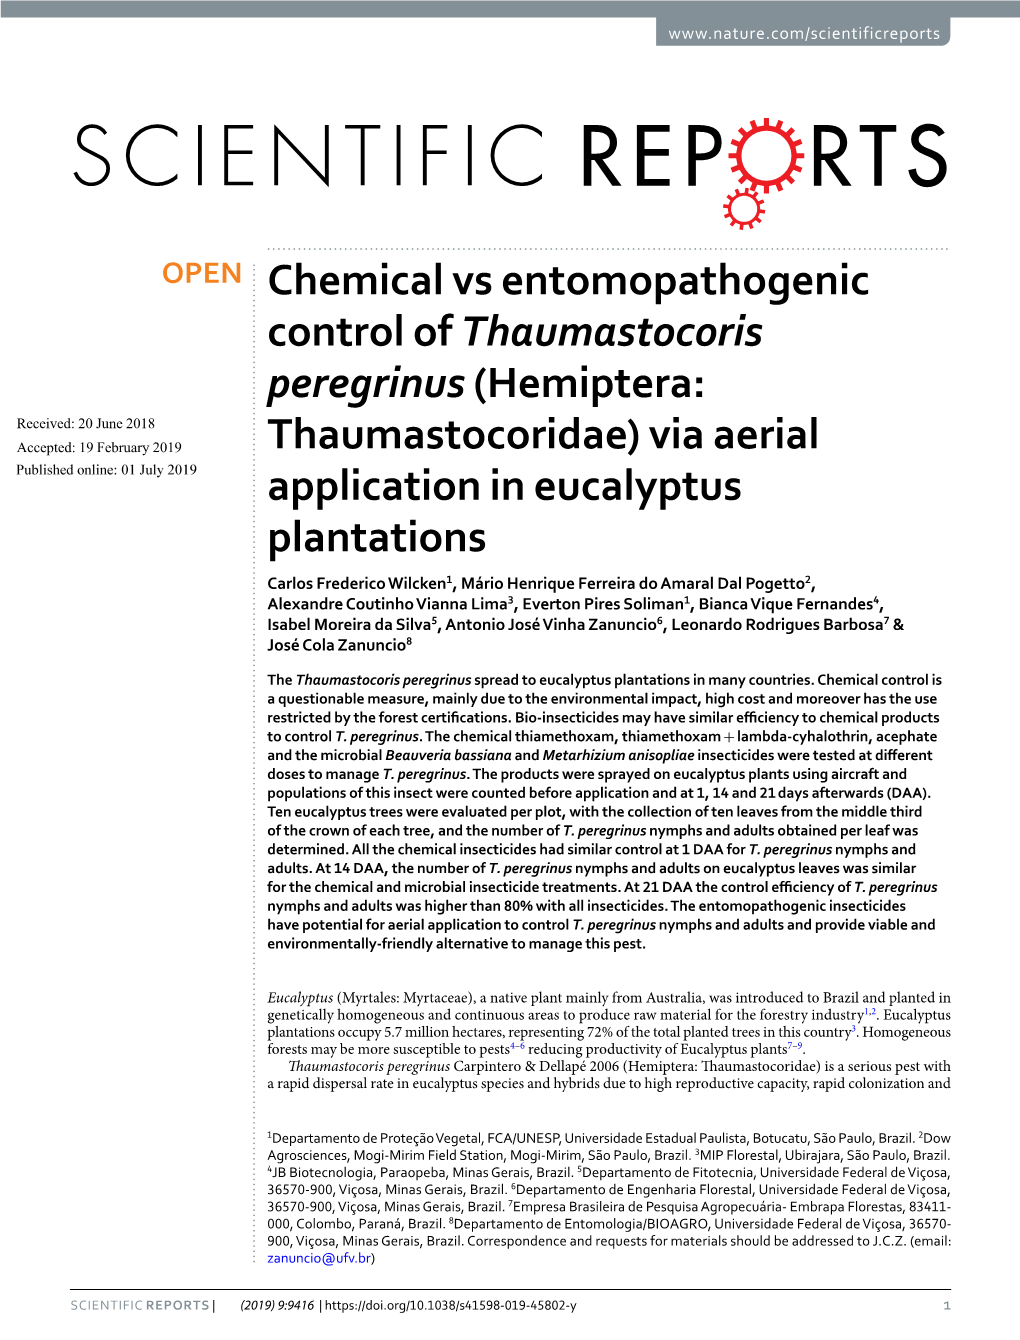 Chemical Vs Entomopathogenic Control of Thaumastocoris Peregrinus (Hemiptera: Thaumastocoridae)